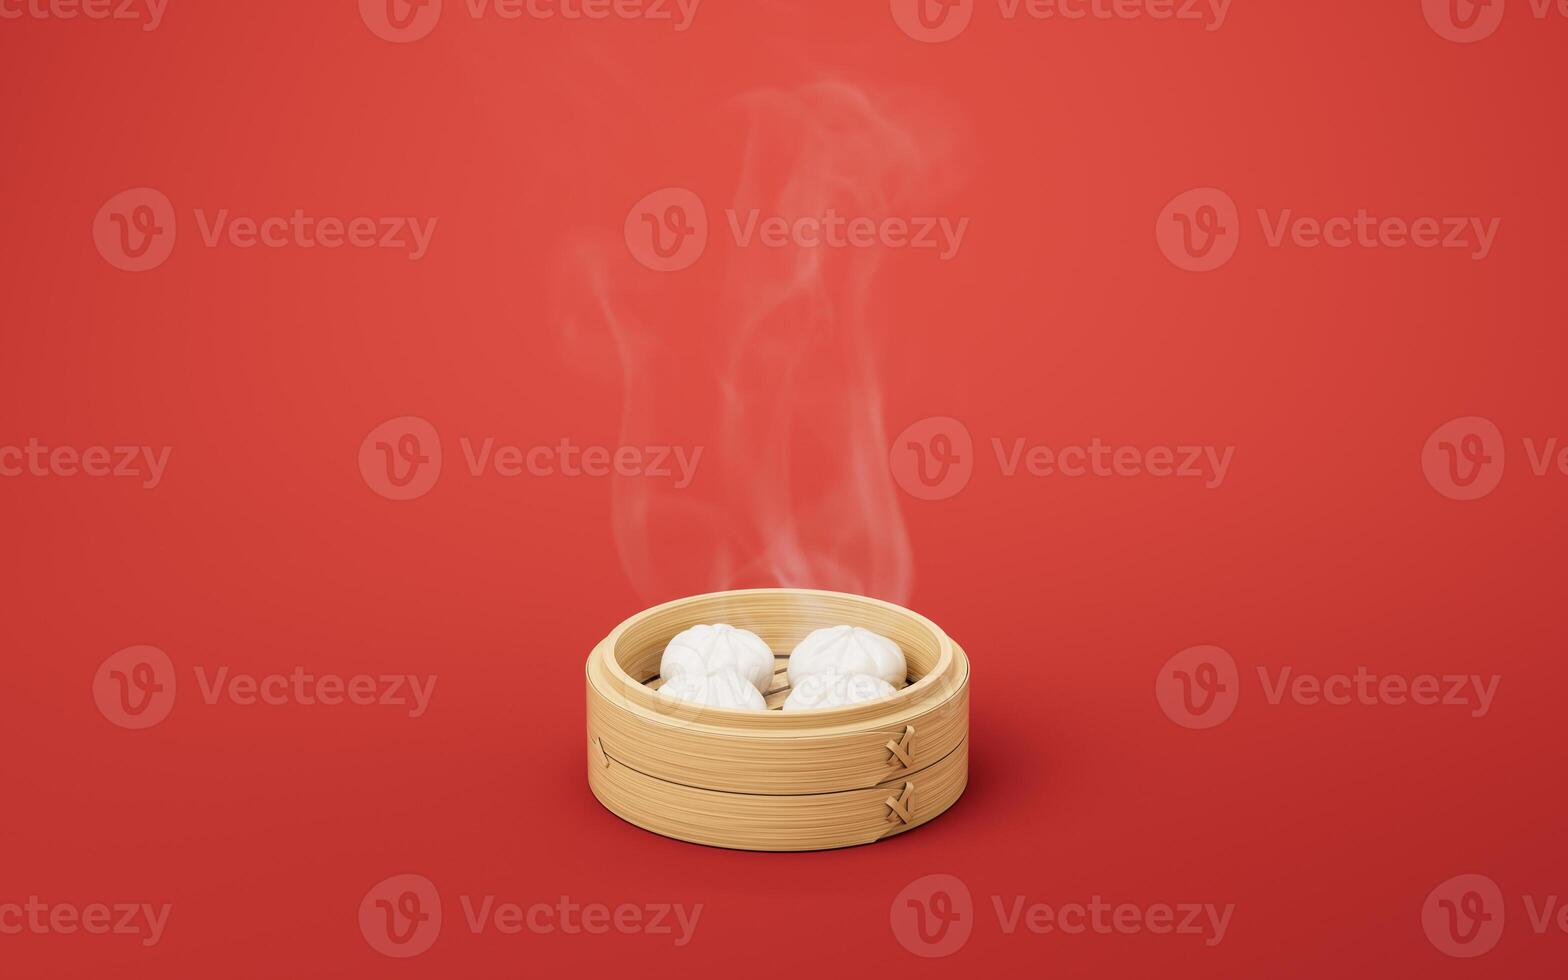 Chinese food baozi in food steamer, 3d rendering. photo